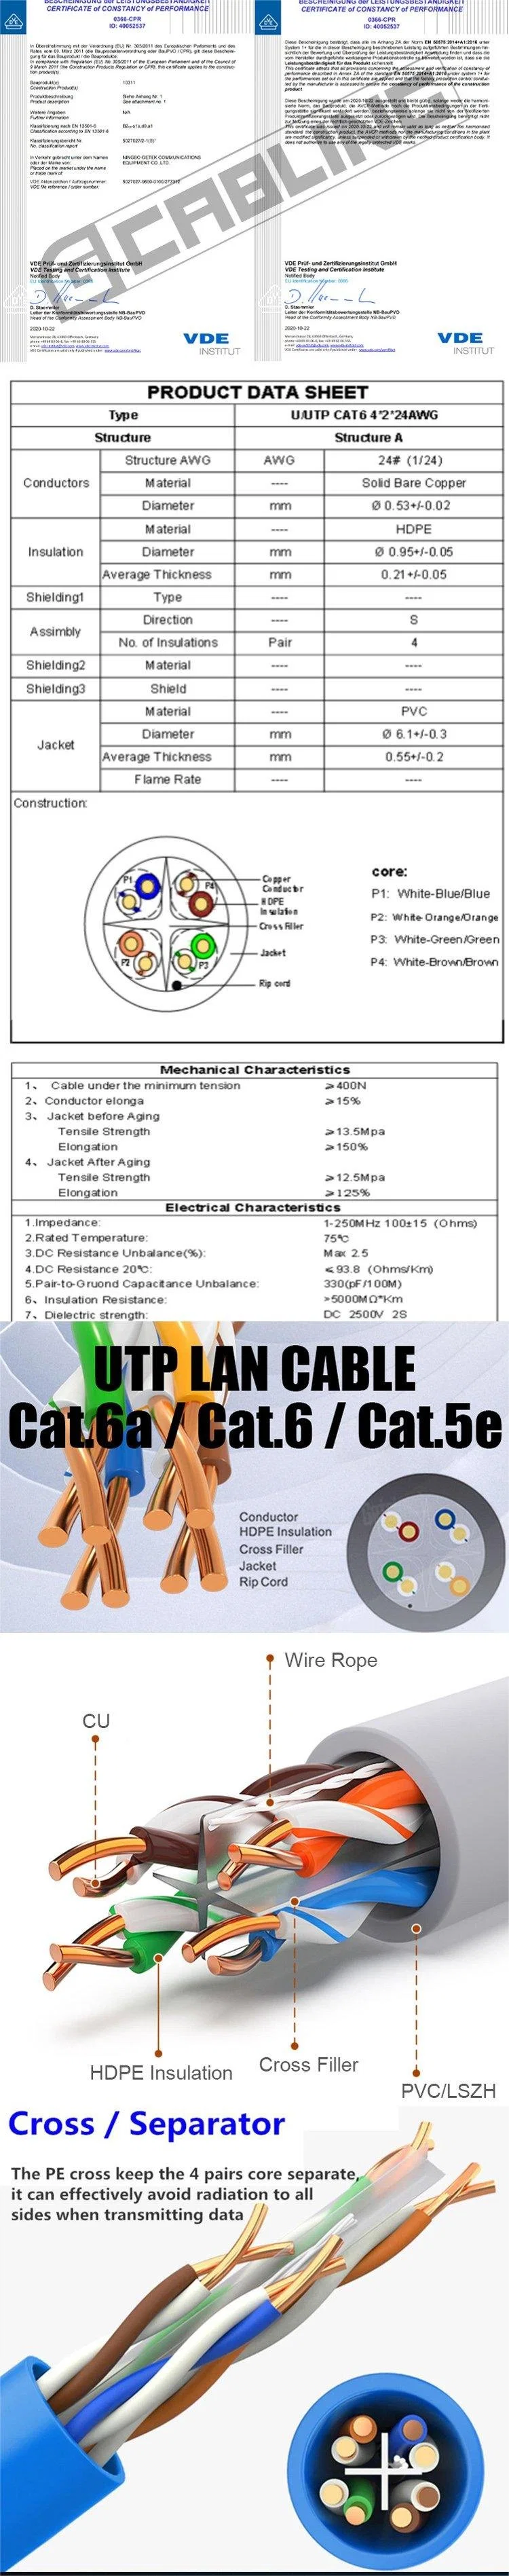 Gcabling Communication LAN Cable 20m 305m 1000m CAT6A CAT6 Cat5e Cable 1000FT UTP LAN Cable